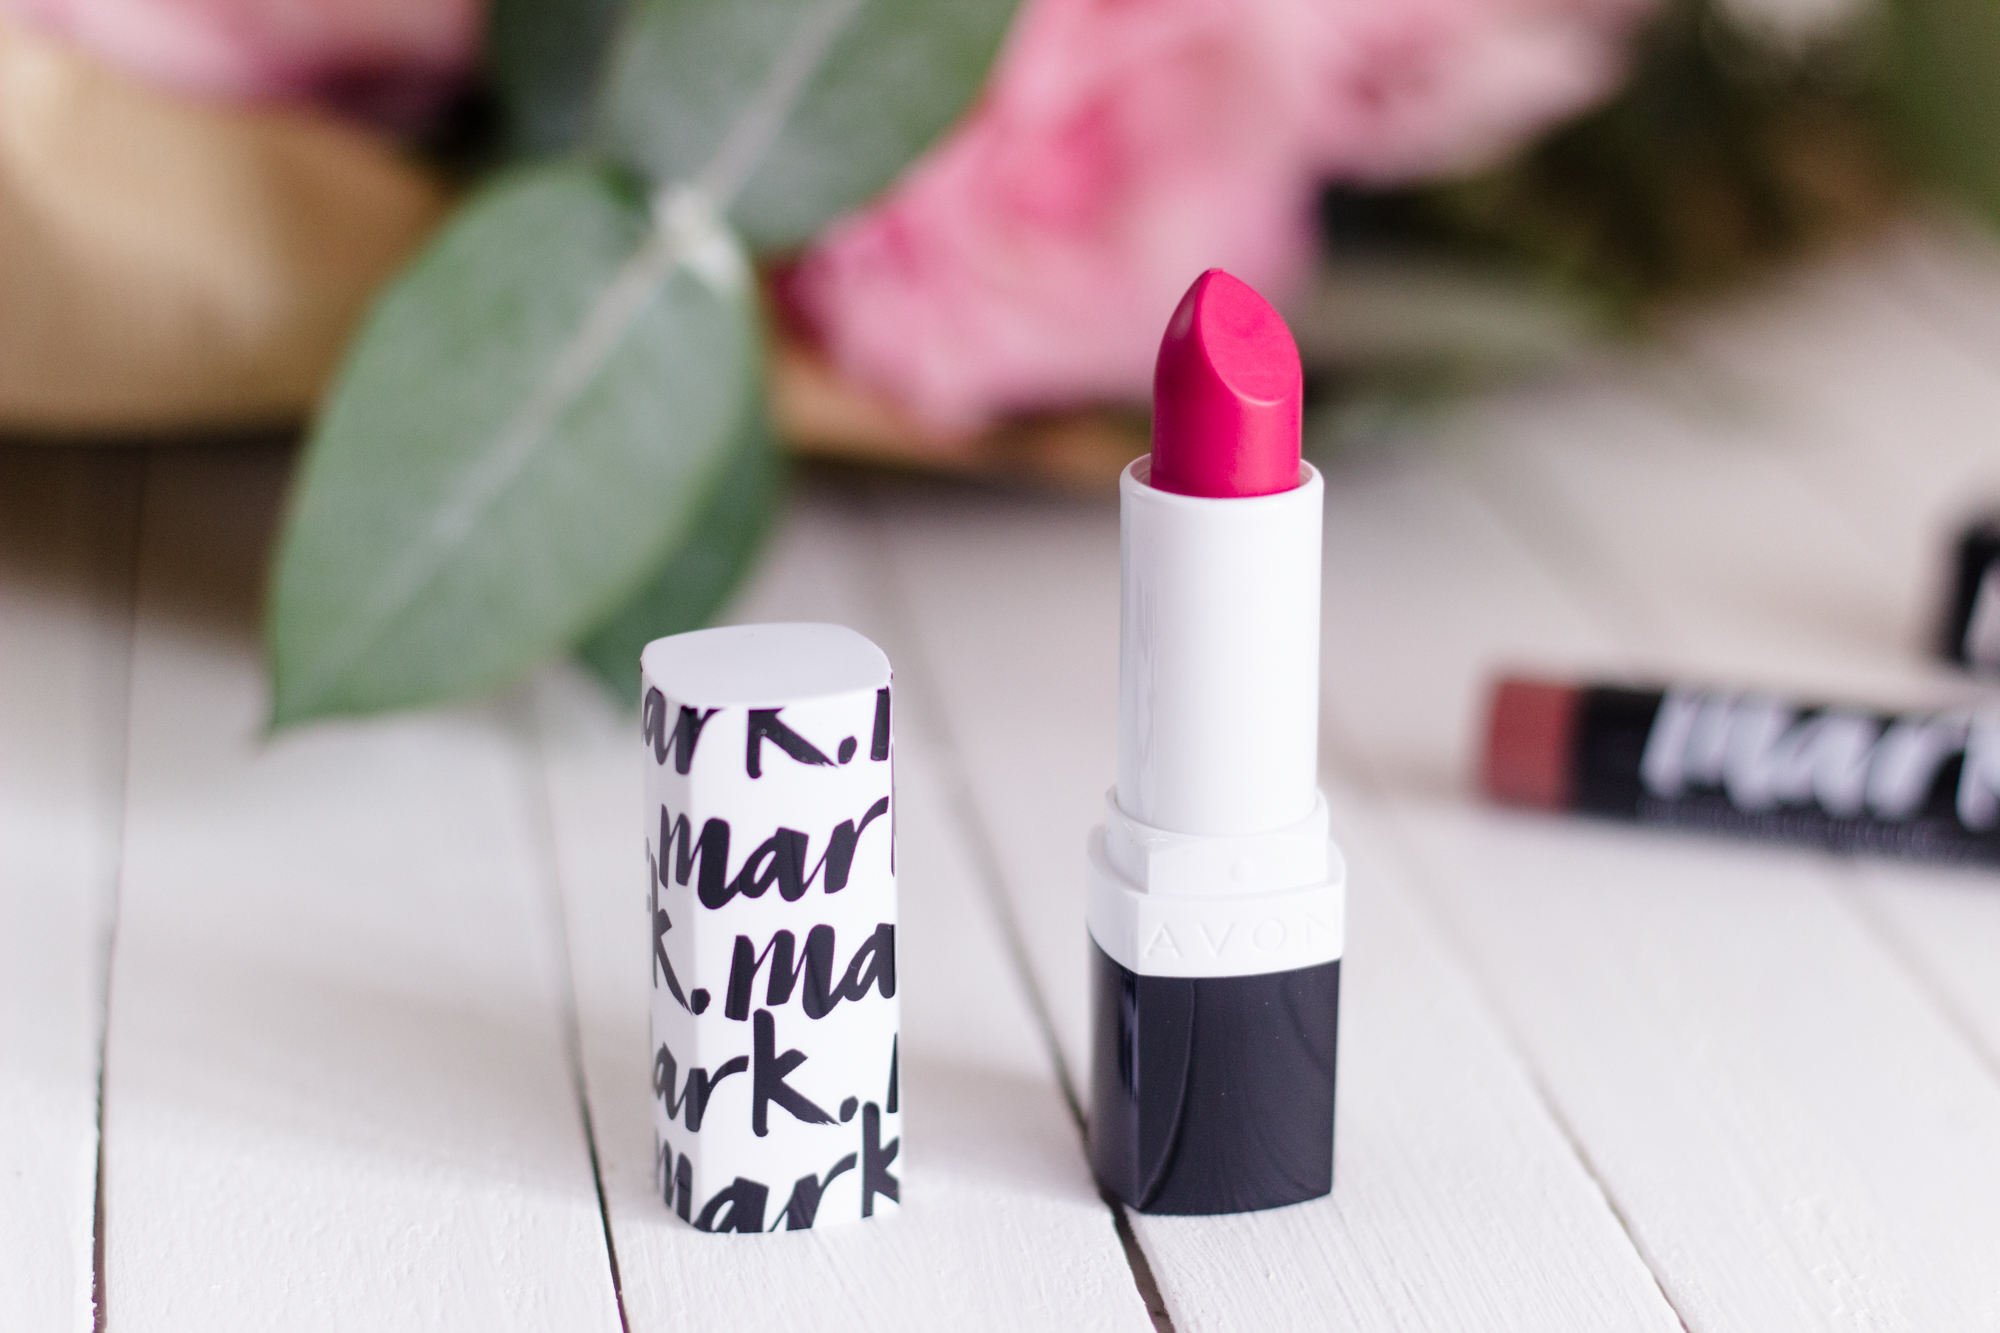 avon-mark-lipstick-pen-colour-